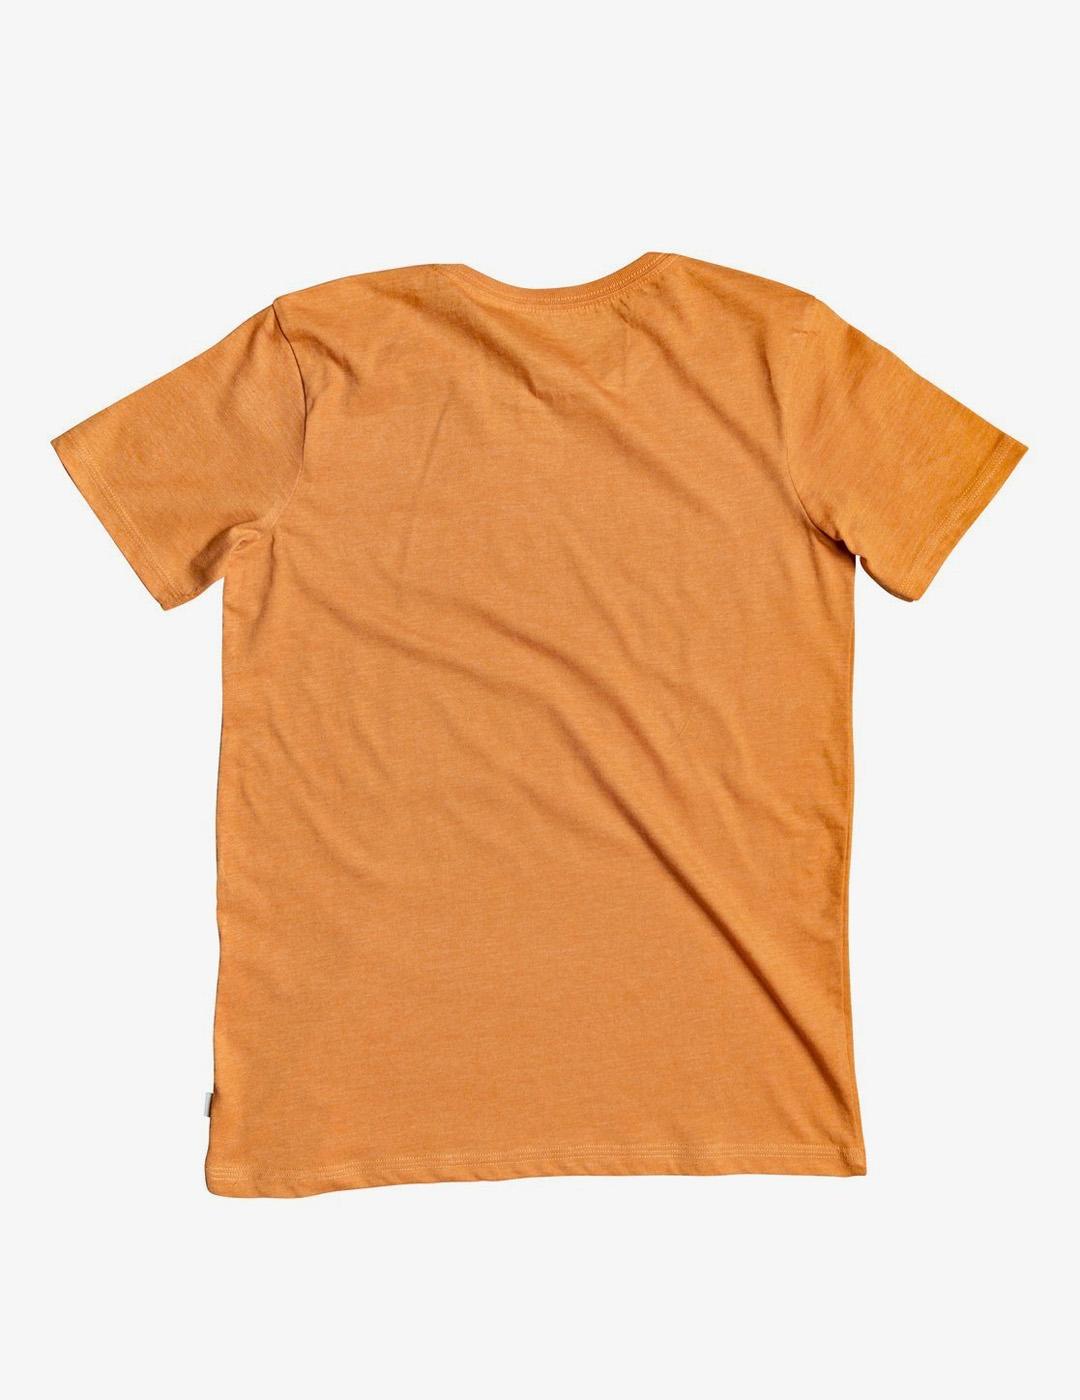 Camiseta Quiksilver (JUNIOR) LIKE WATER - Apricot